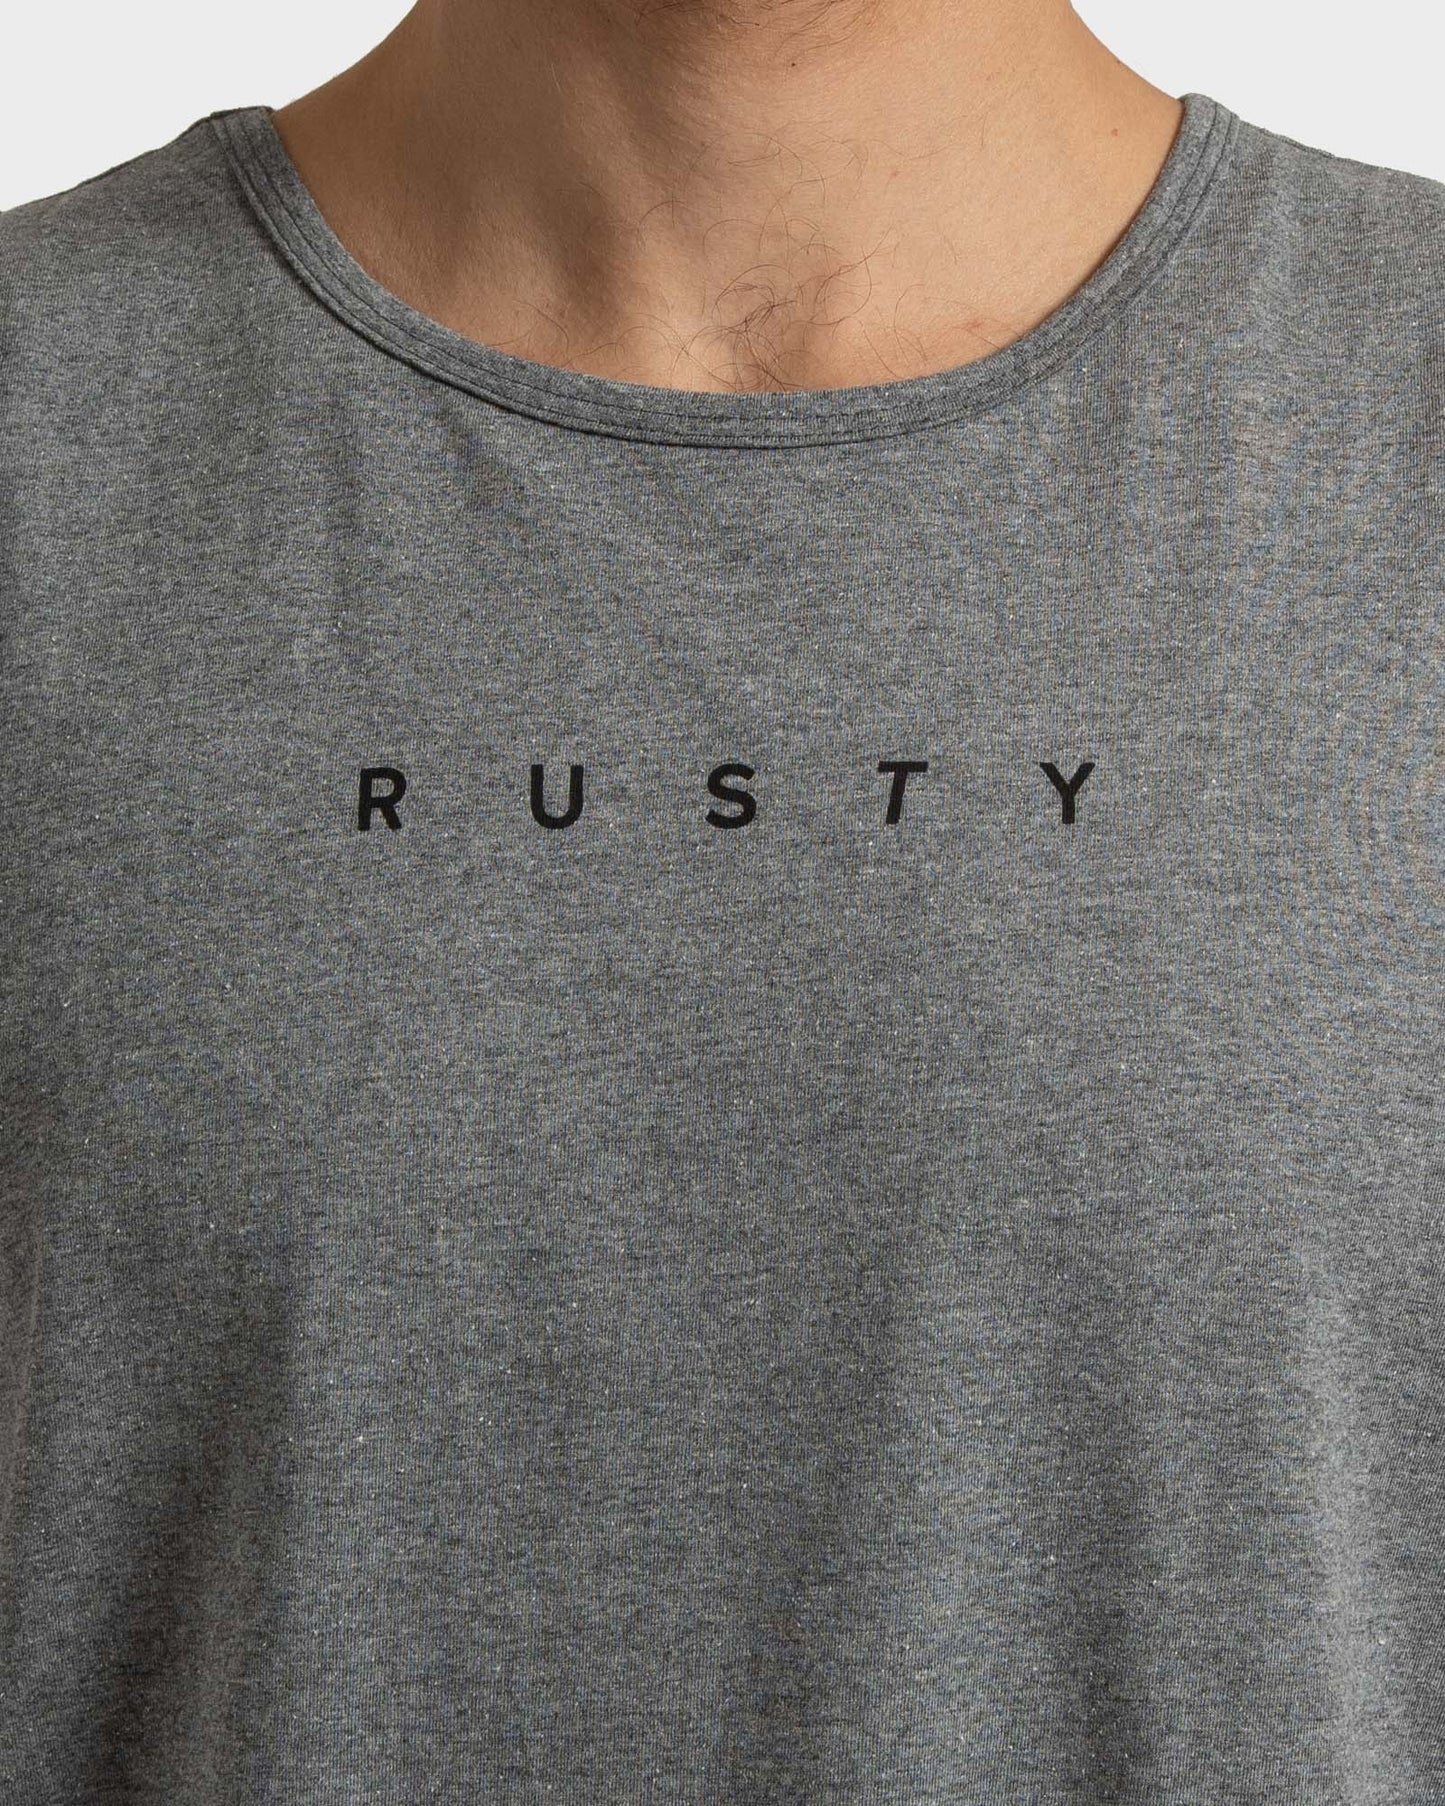 Camiseta Regata Rusty Short Cut Mescla Preto